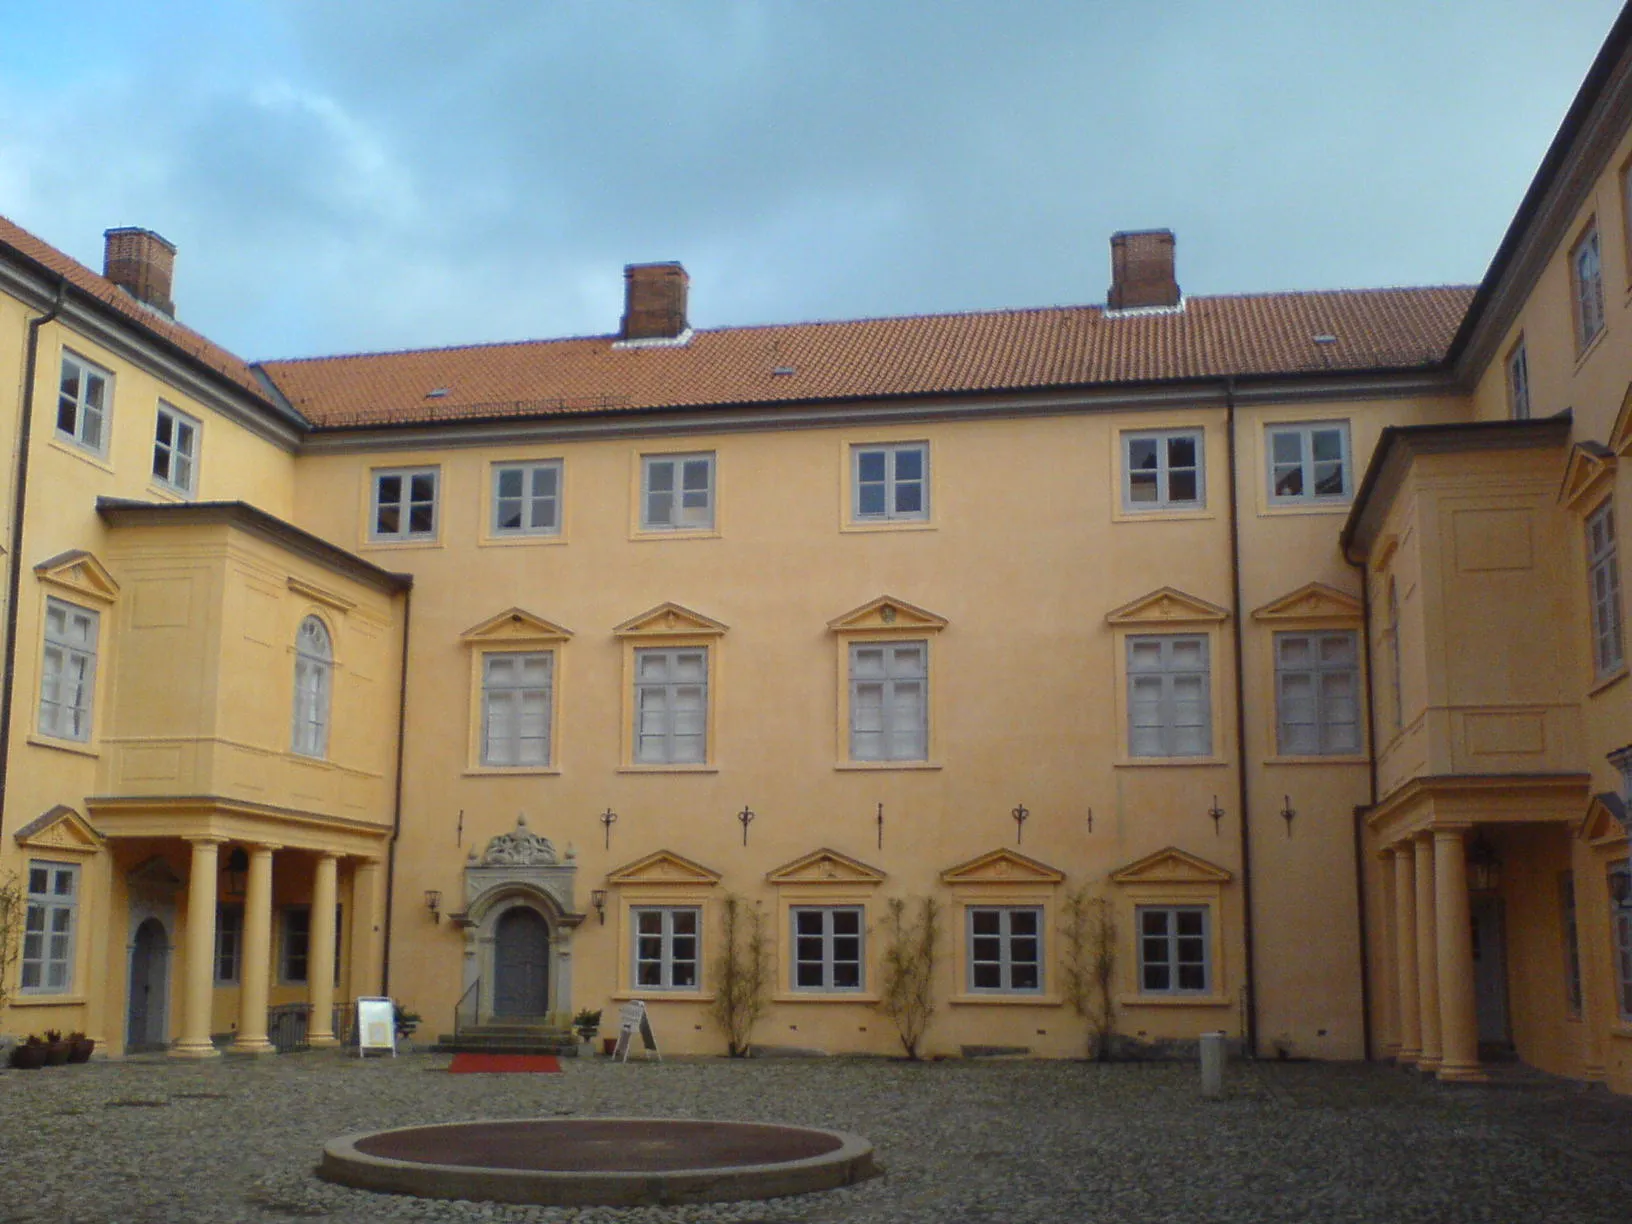 Photo showing: Description=Eutiner Schloss, Hof

Source=myself
Date=02.2007
Author=PodracerHH 19:47, 4 February 2007 (UTC)